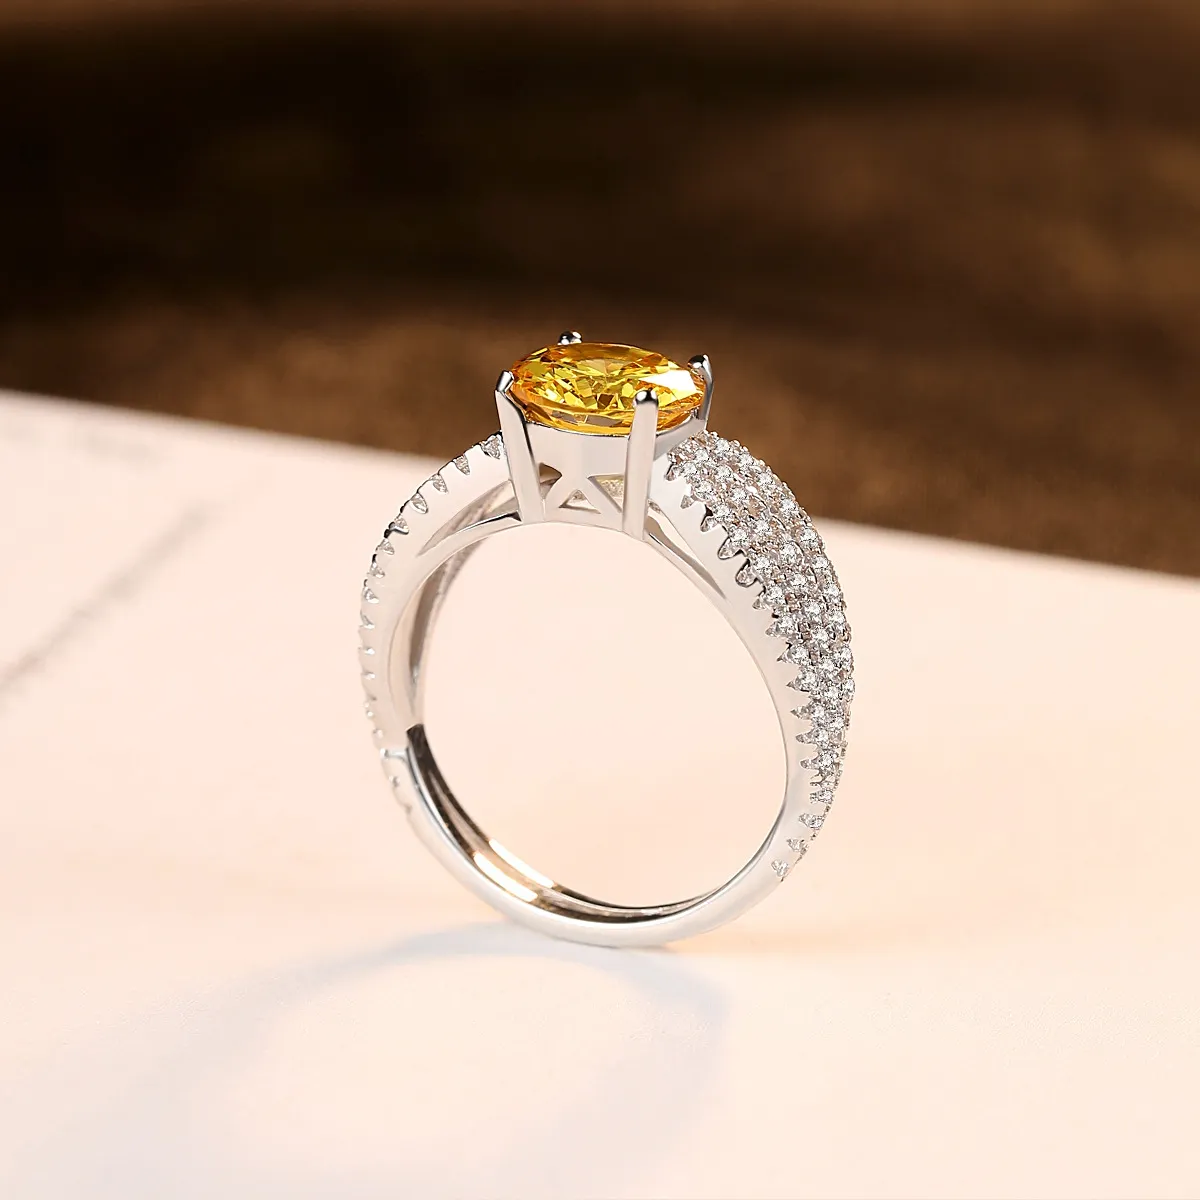 S925 Brand de bague en argent sterling aaa zircon jaune cristal anneau haut de gamme haut gard